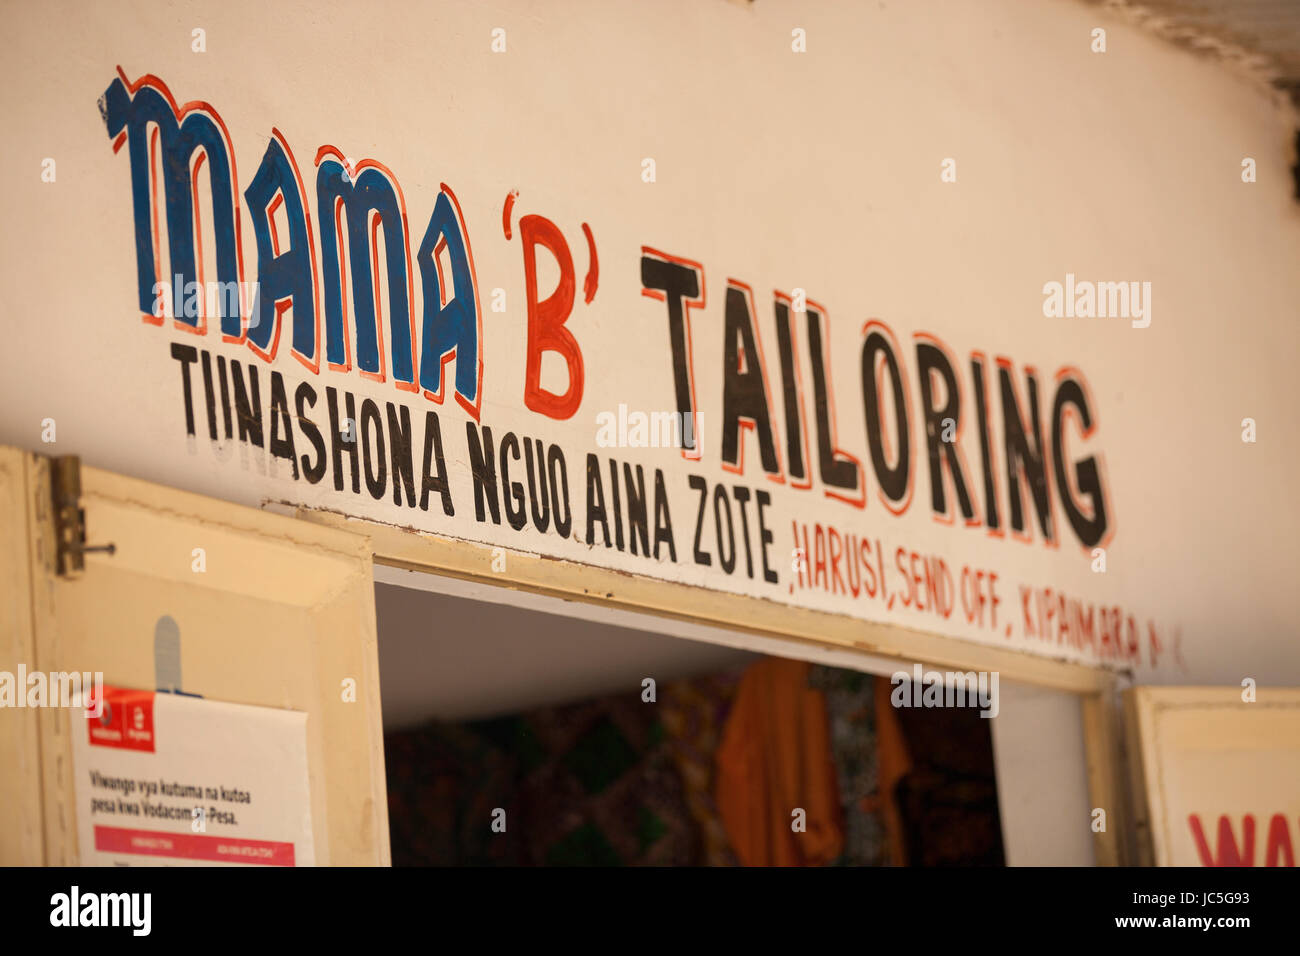 La tienda signo frente a una hembra sastrería, Tanzania, África Foto de stock